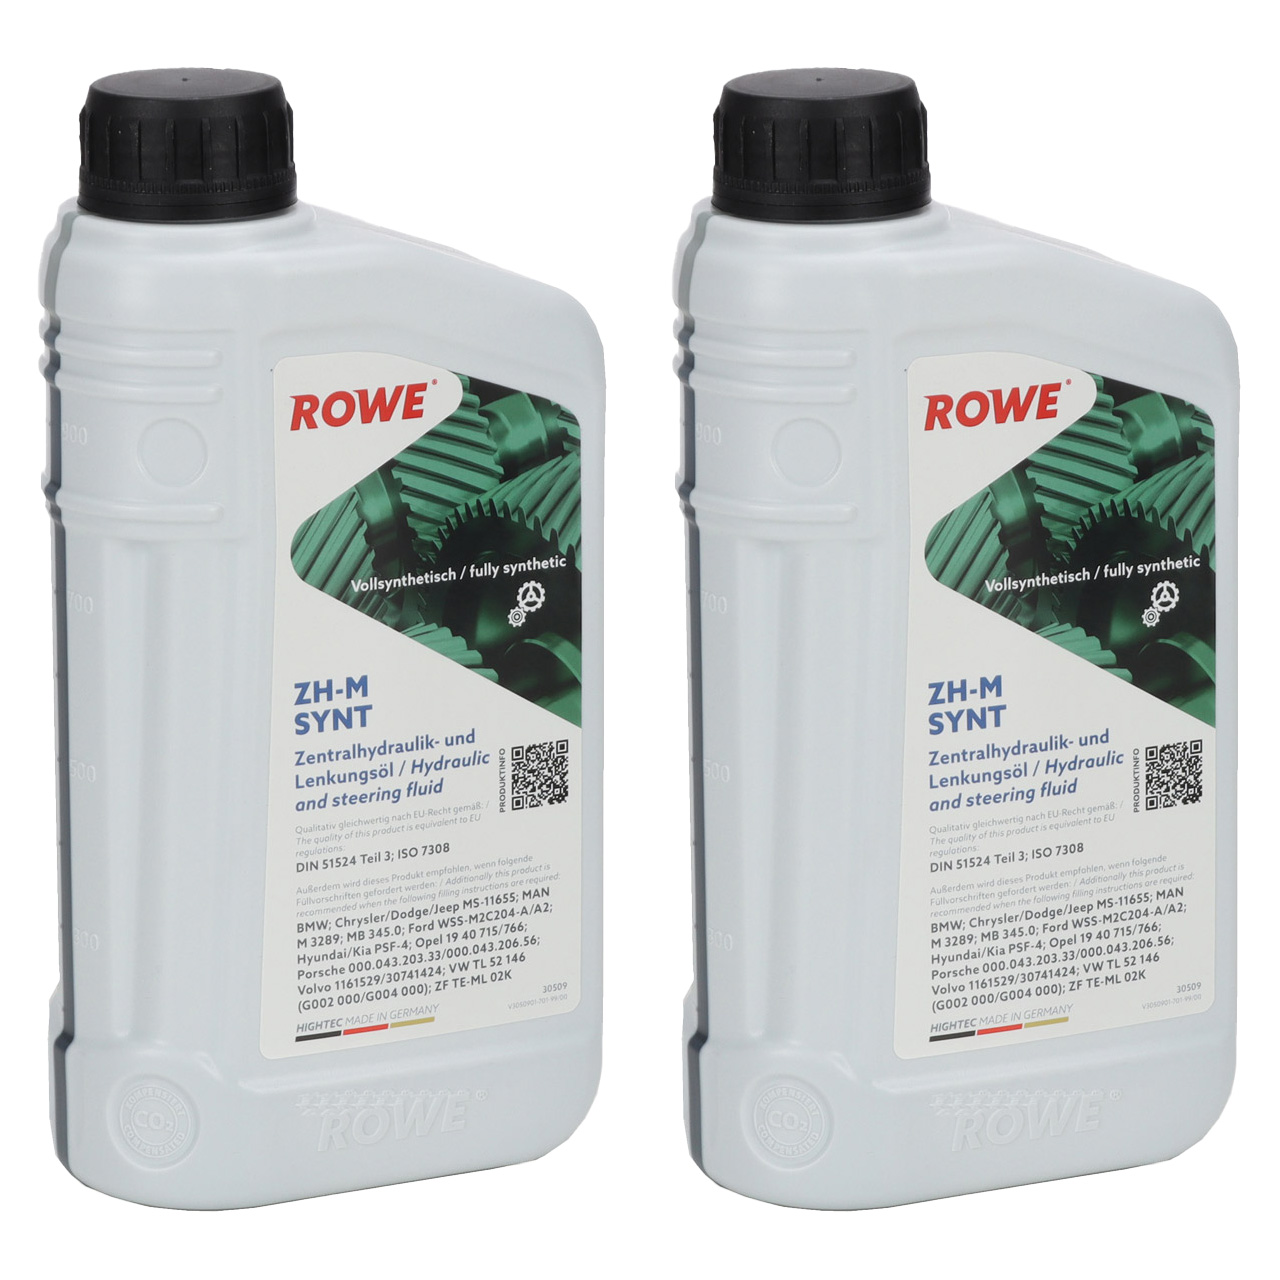 2L 2 Liter ROWE ZH-M SYNT Hochleistungs-Hydrauliköl Lenkungsöl DIN 51524 Teil 3 ISO 7308